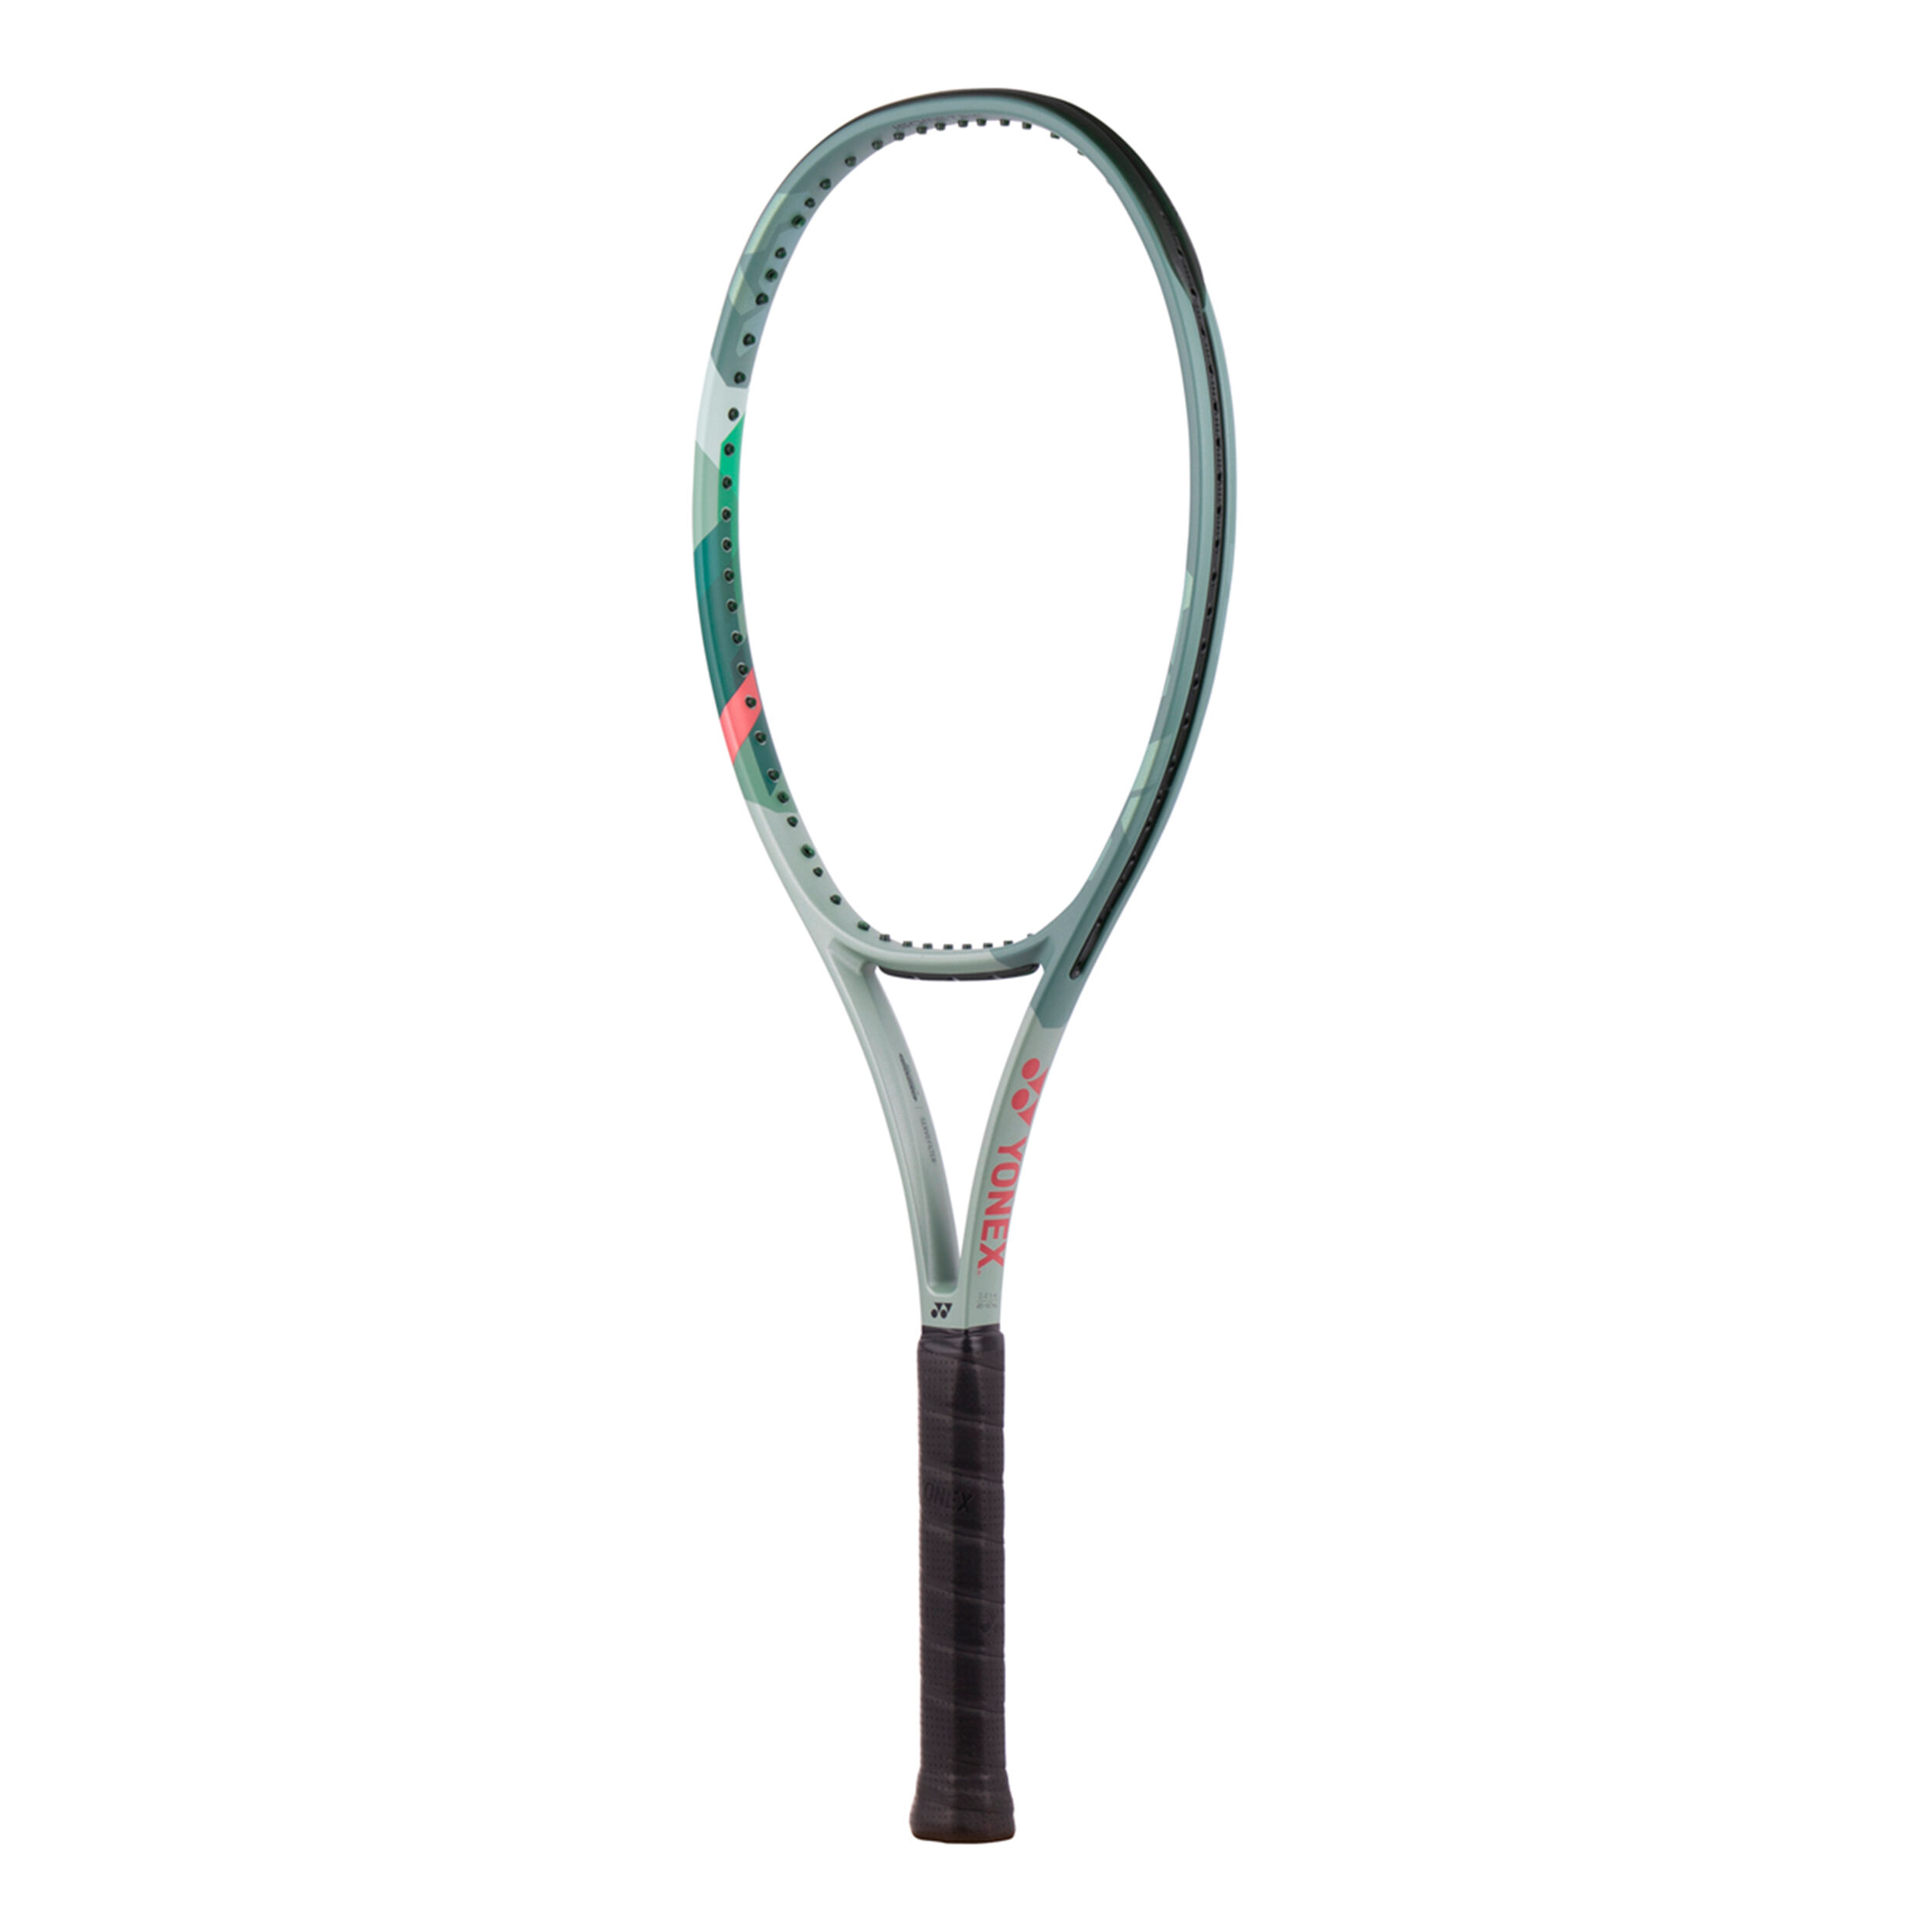 Buy Yonex Percept 100 (300g) online | Tennis Point COM